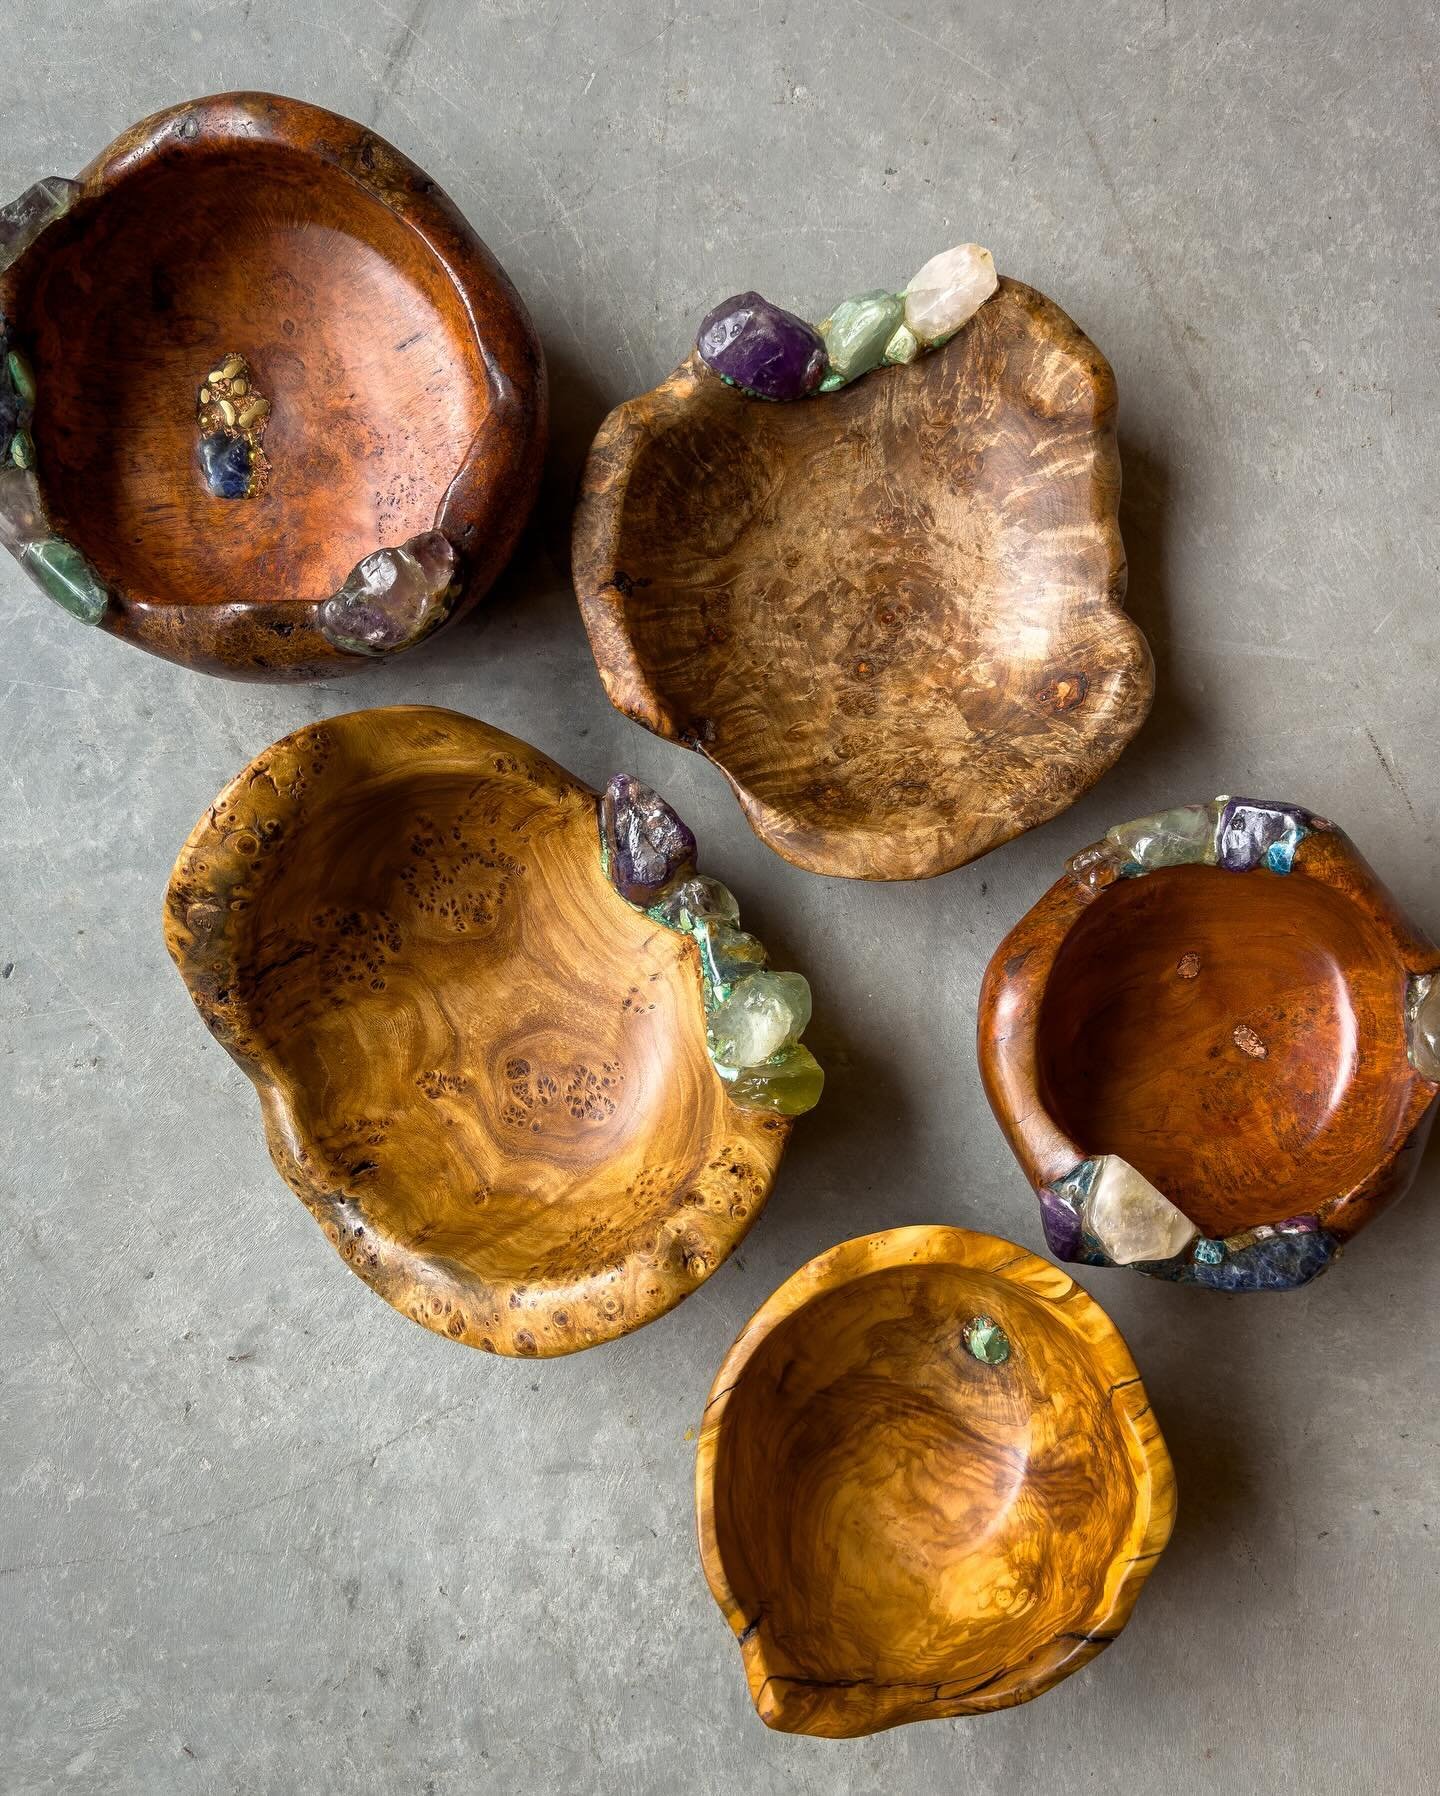 Dear rain,

Wood you be a gem and go away?

Best,
The Art Cellar Crew

Nathan &amp; Mariella Favors handmade wood bowls